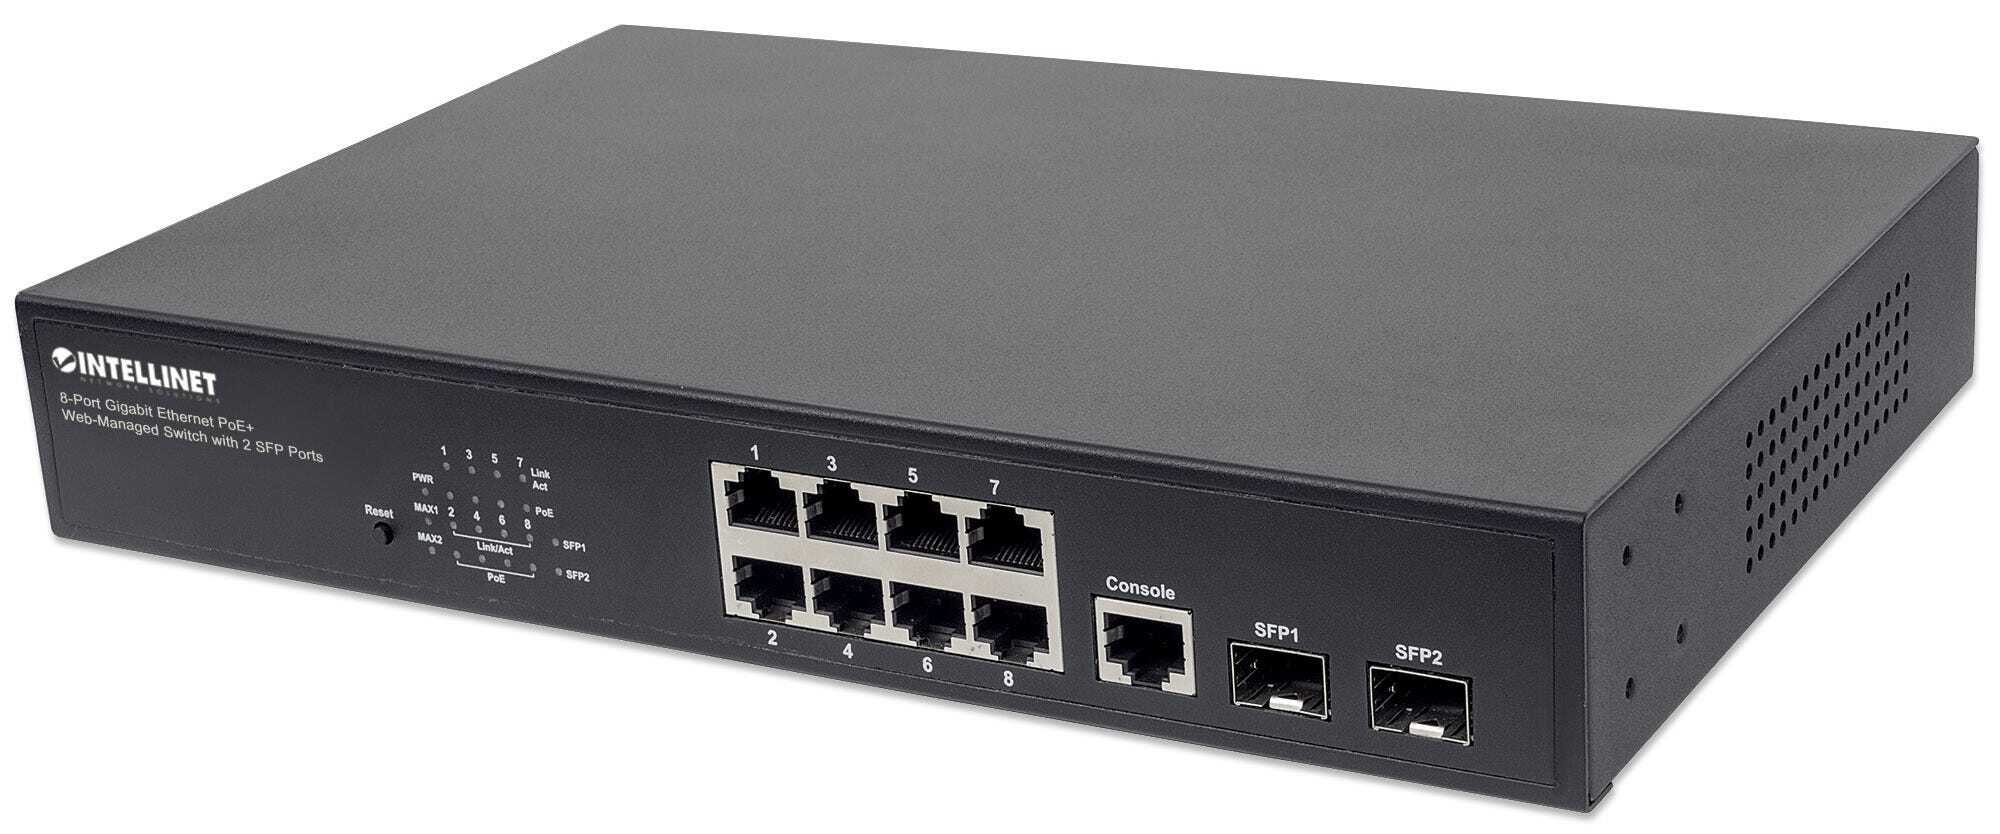 Intellinet 8-Port Gigabit Ethernet PoE+ Web-Managed Switch with 2 SFP Ports, IEEE 802.3at/af Power over Ethernet (PoE+/PoE) Compliant, 140 W, Endspan, Desktop, 19" Rackmount (Euro 2-pin plug)